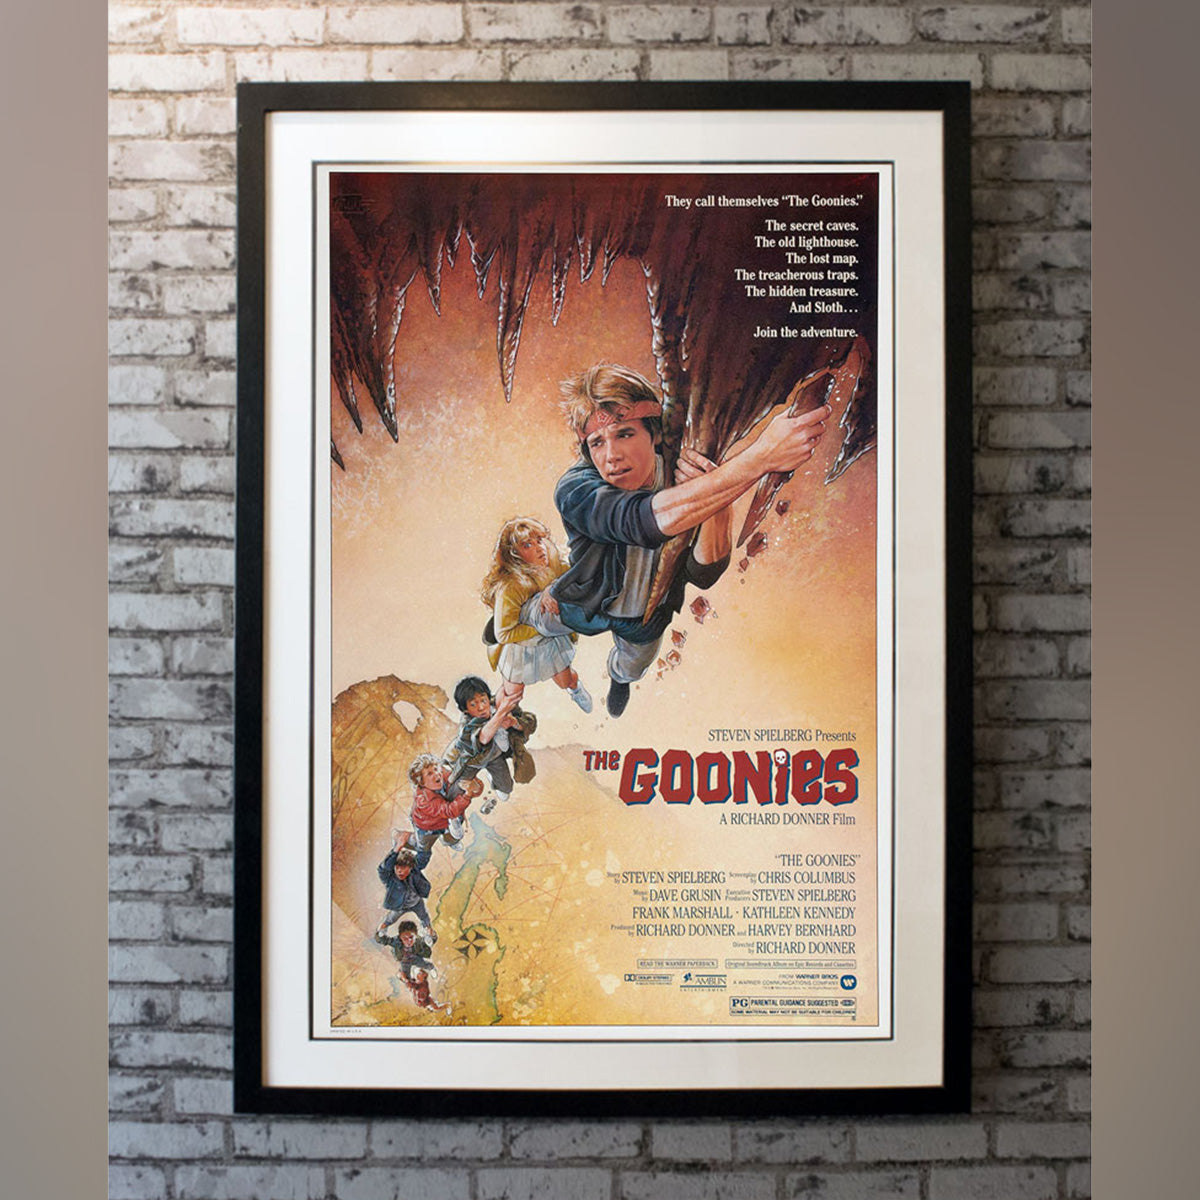 Original Movie Poster of Goonies, The (1985)